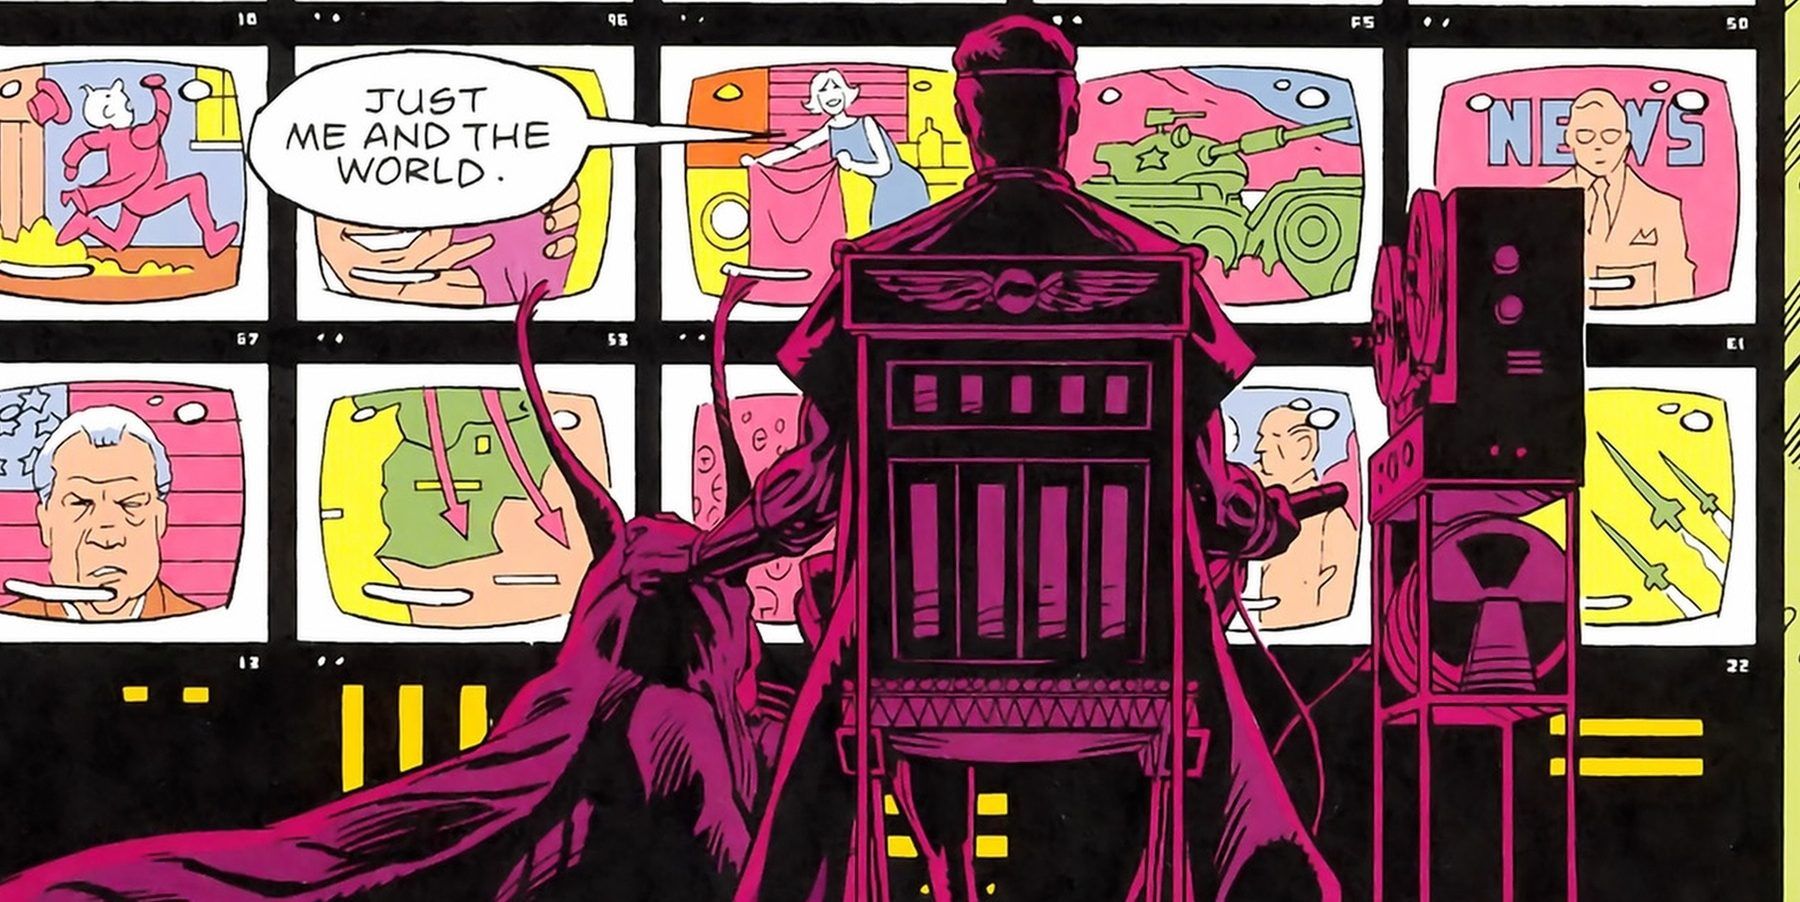 Doomsday Clock #10 Homages a Classic Watchmen Scene | CBR